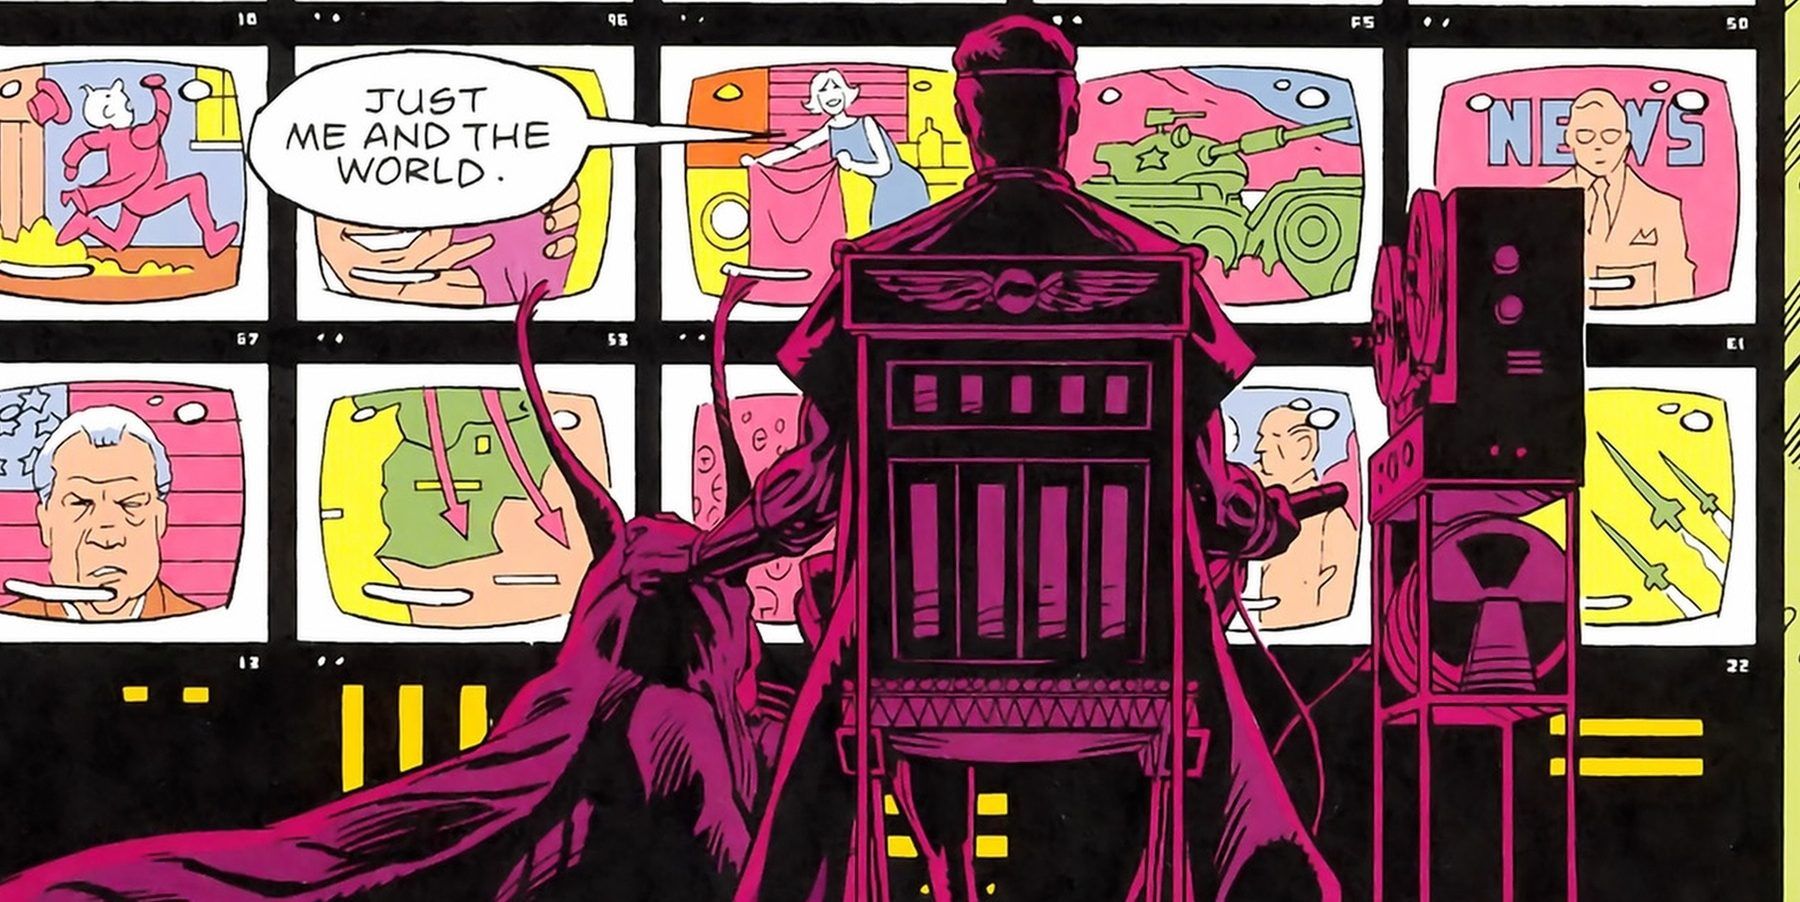 Doomsday Clock #10 Homages a Classic Watchmen Scene | CBR